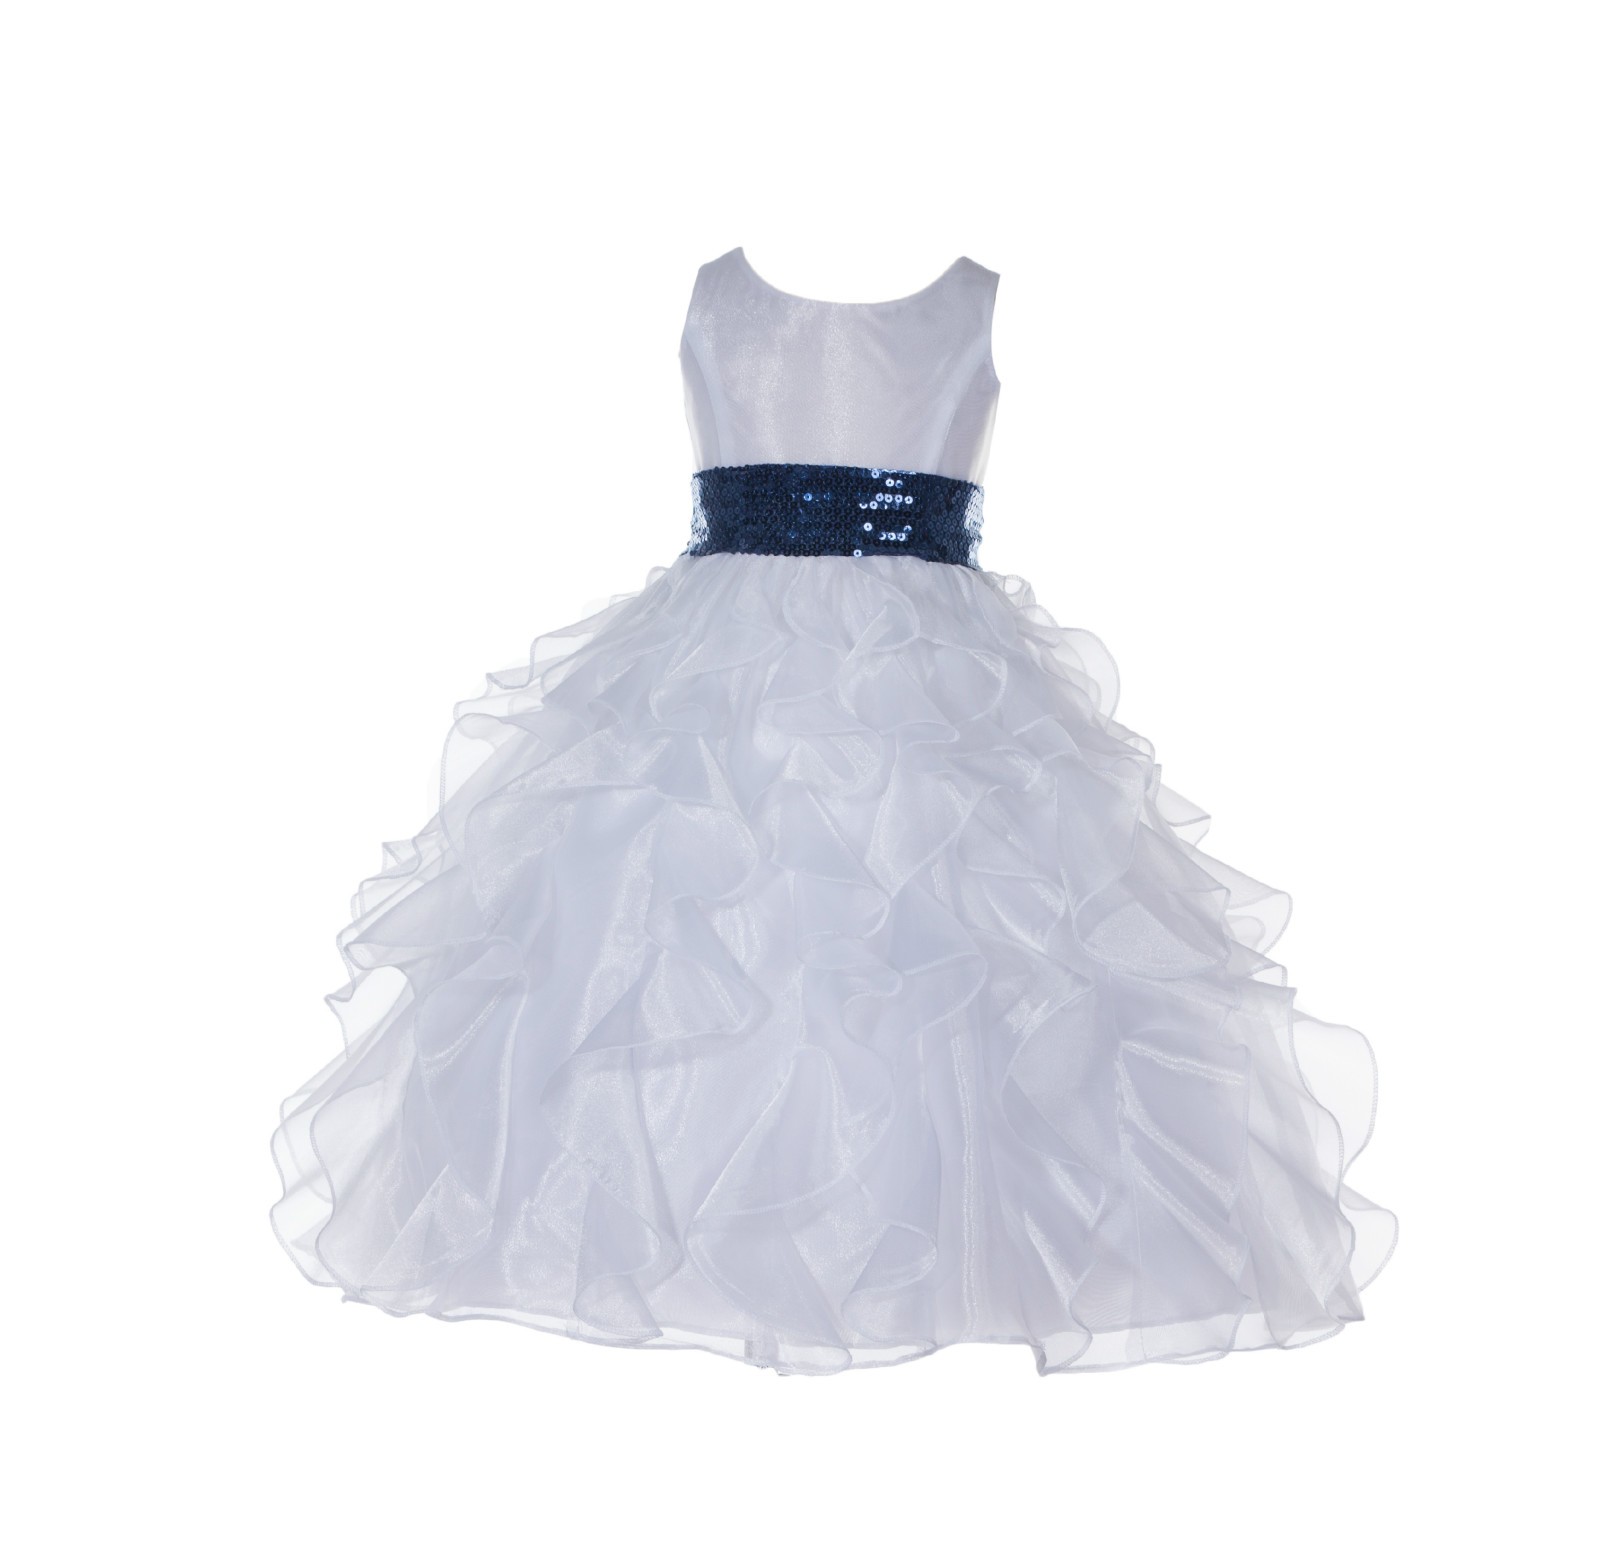 White Ruffled Organza Navy Sequin Sash Flower Girl Dress 168mh